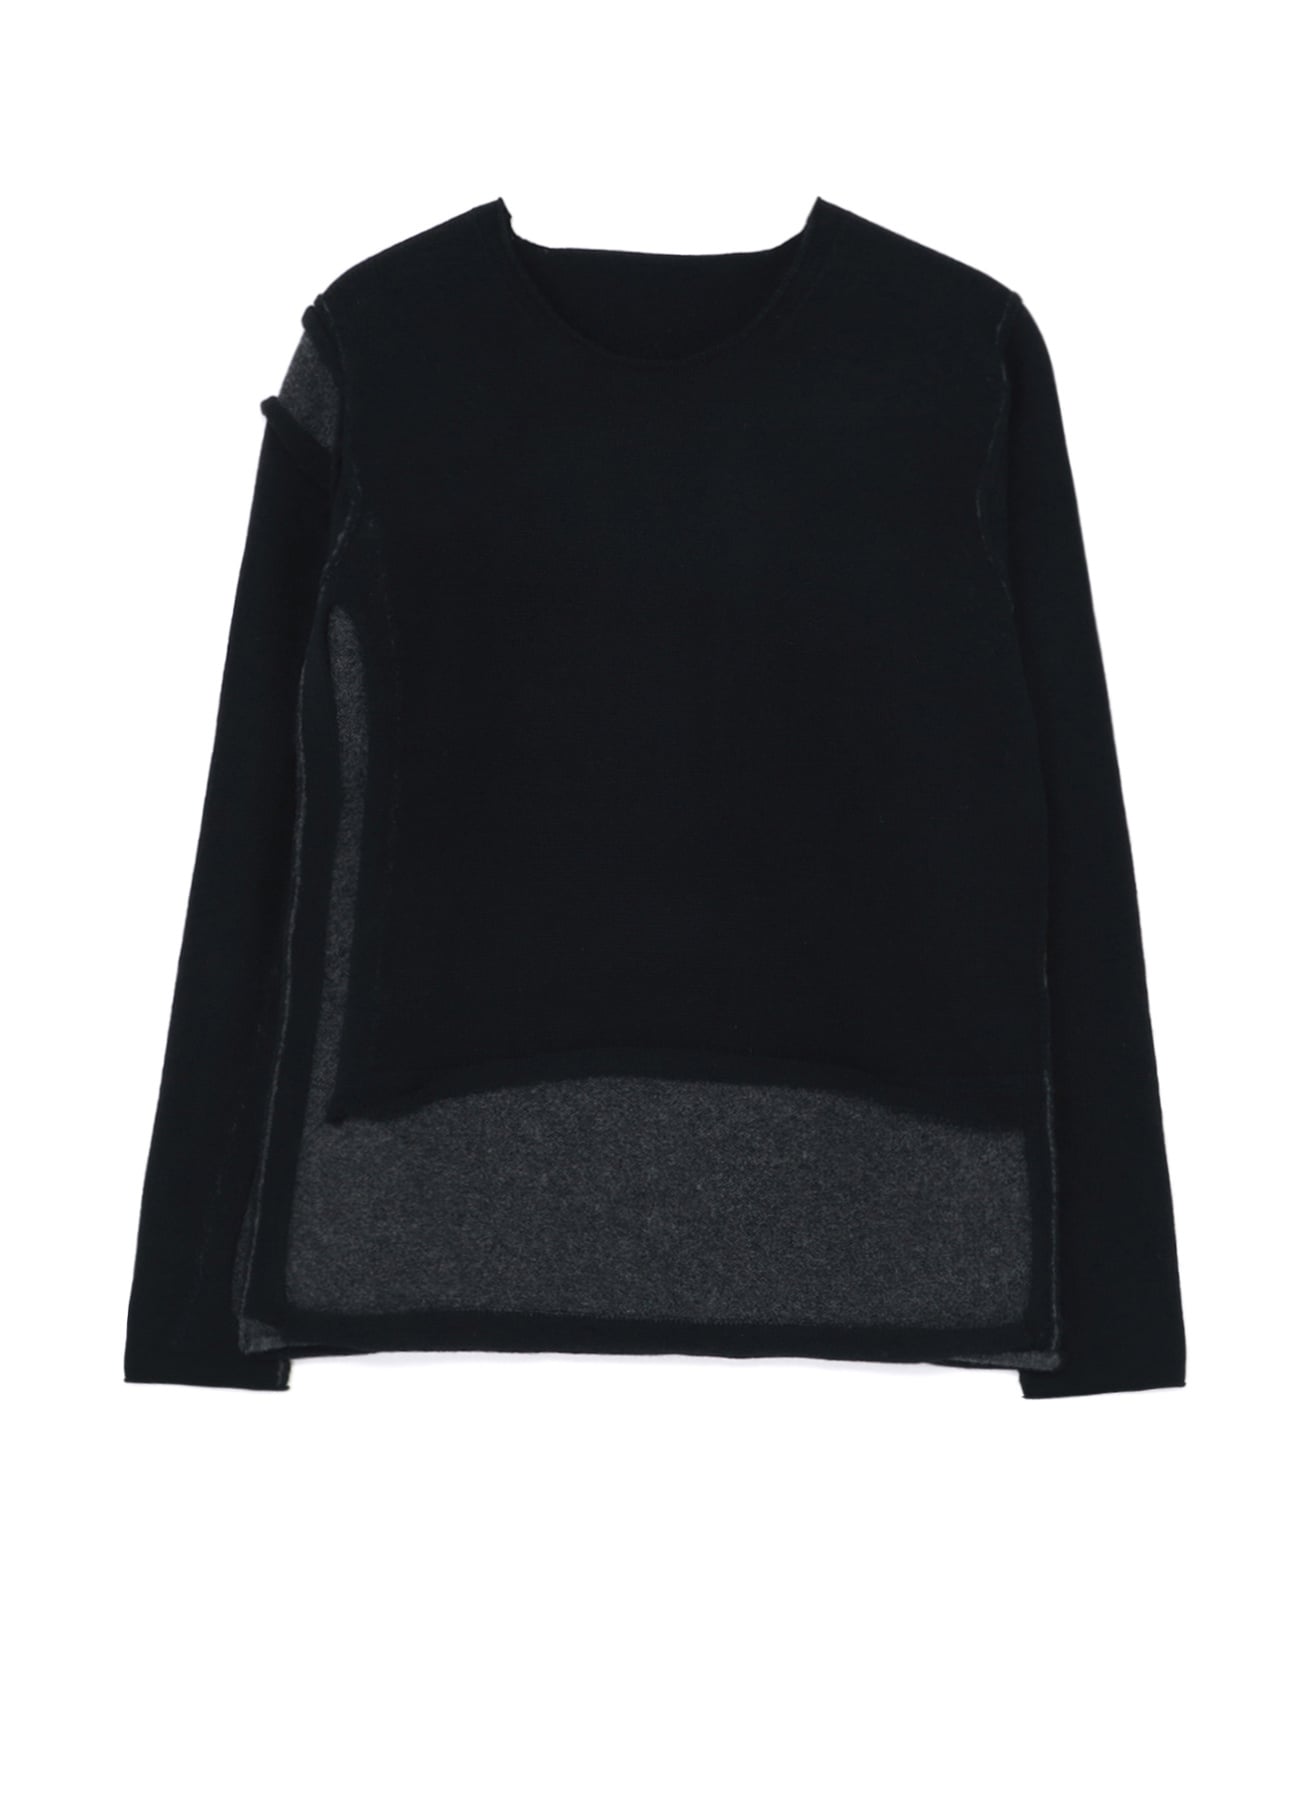 Short-Sleeved Draped Sweater Black Wool Knit